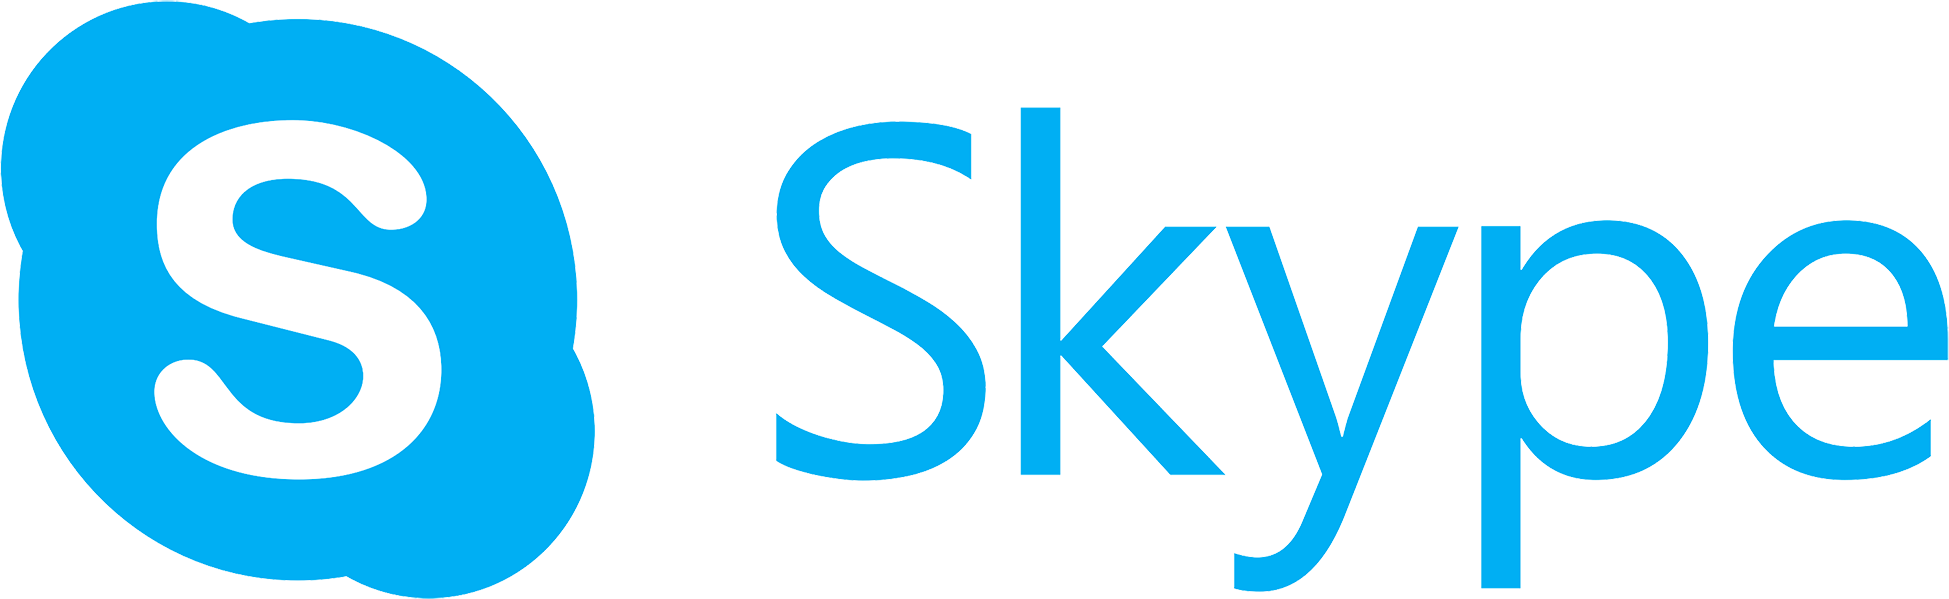 Download Skype 2017   Skype Logo   Full Size Png Image   Pngkit - Skype, Transparent background PNG HD thumbnail